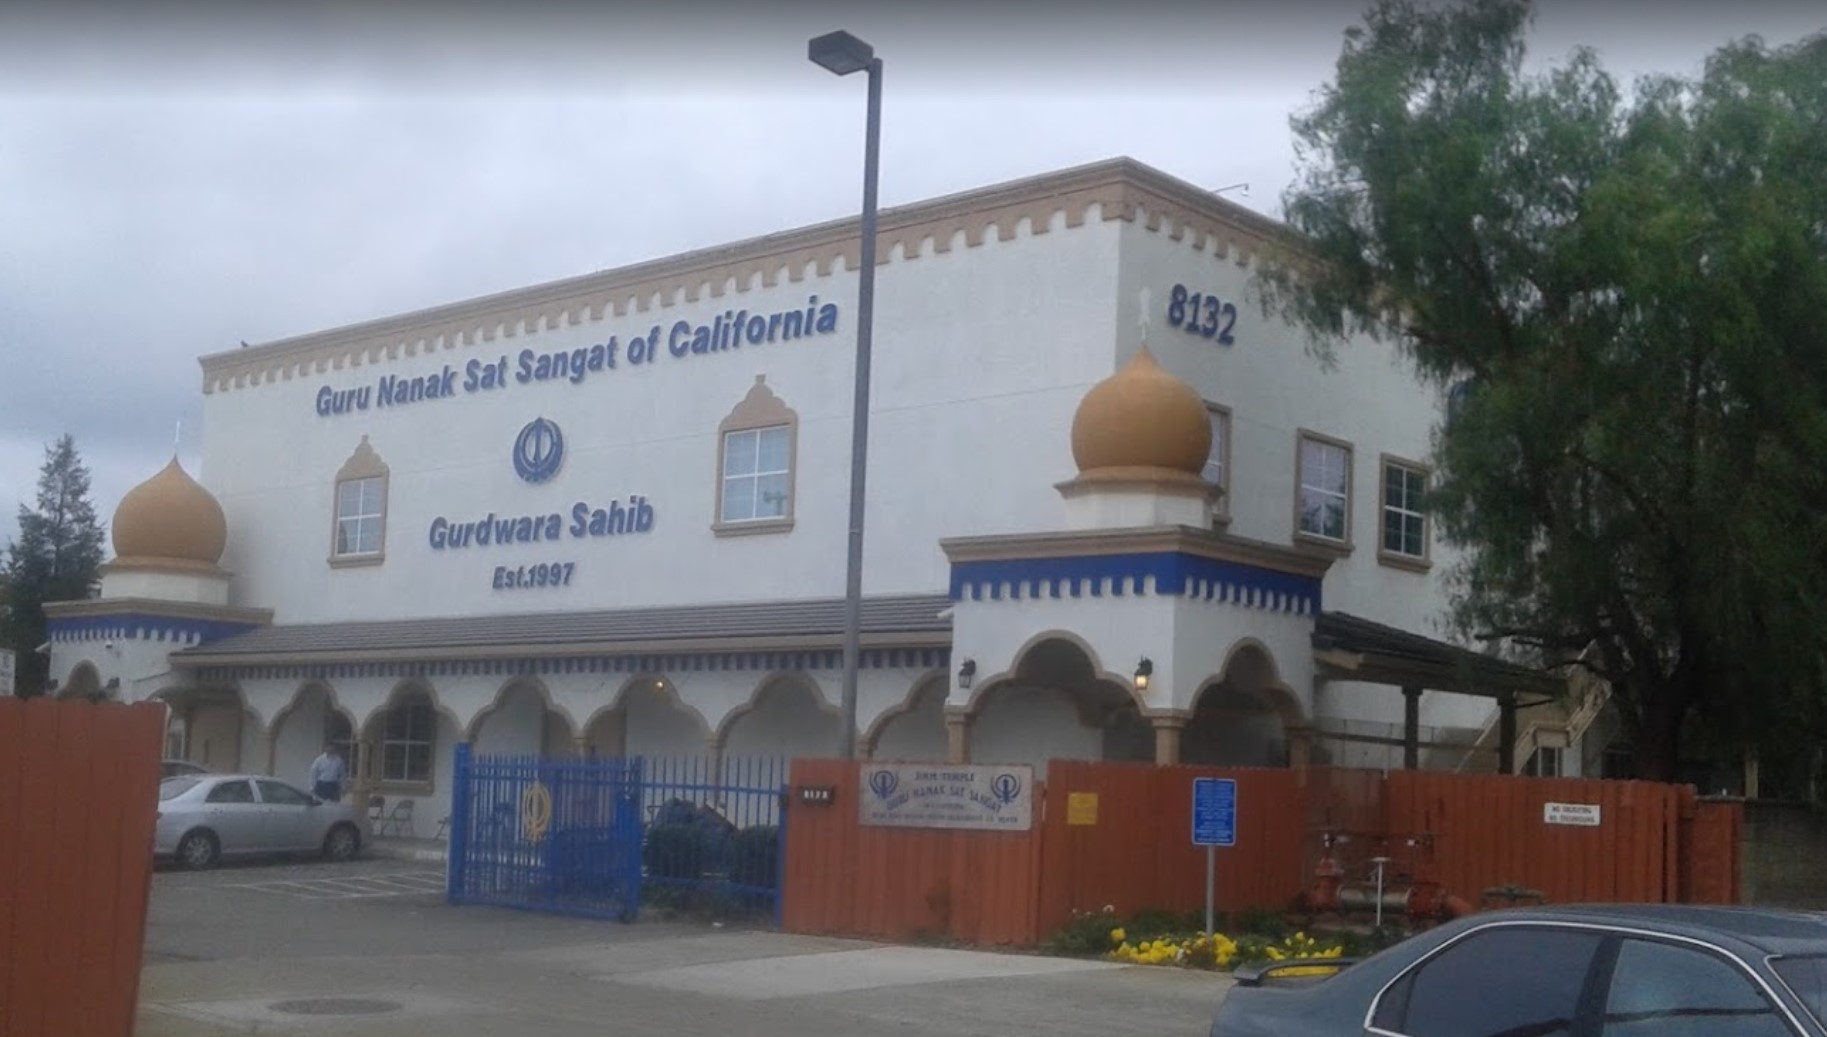 Guru Nanak Sat Sangat Of California